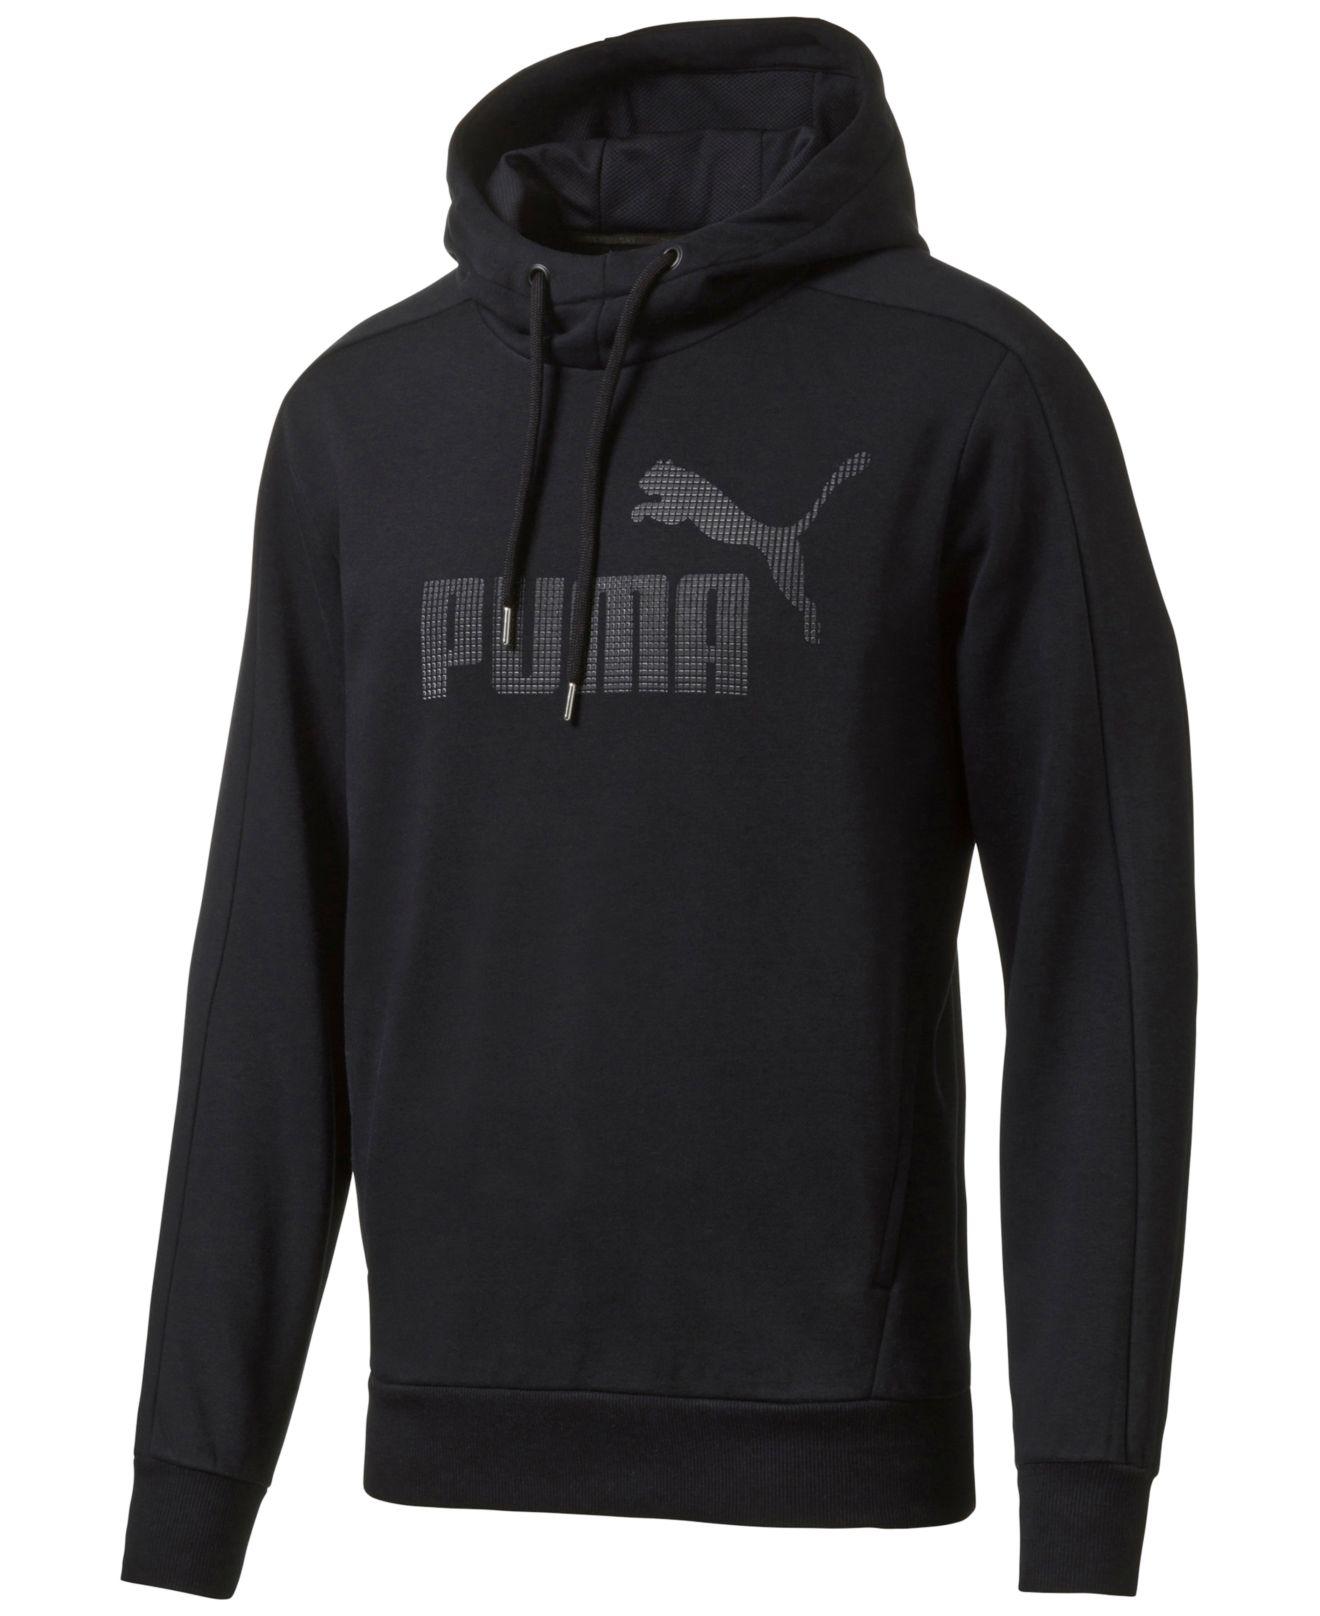 Lyst - Puma Men's T7 Drycell Fleece Hoodie in Black for Men